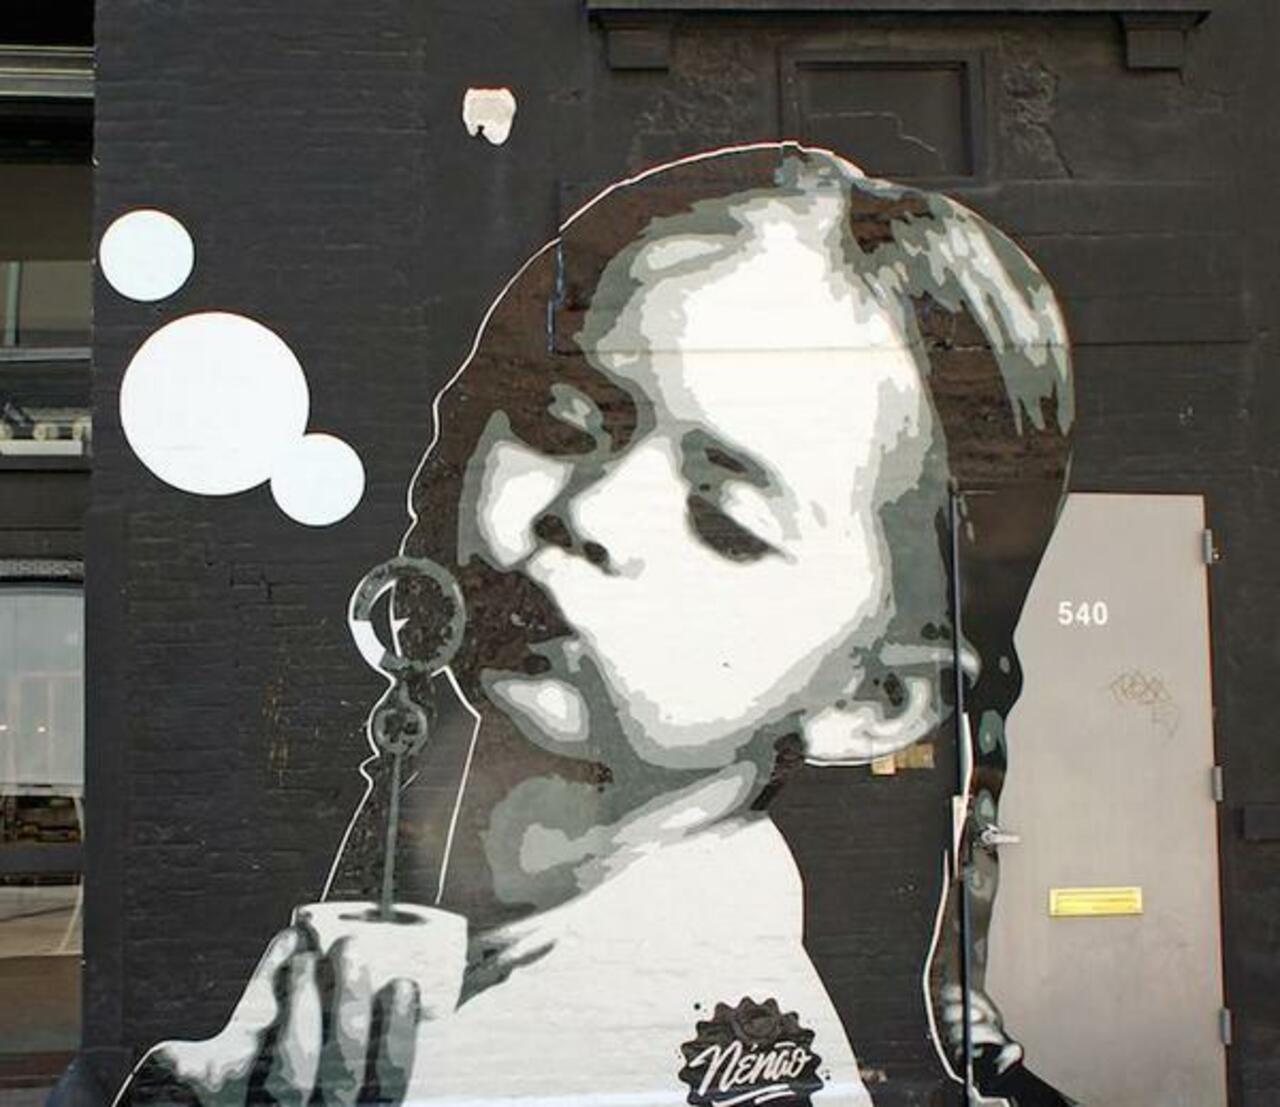 Nueva York, USA. #streetart #art #NYC #USA #spray #stencil #urbanart #arte #graffiti http://t.co/trvVPh2f9H